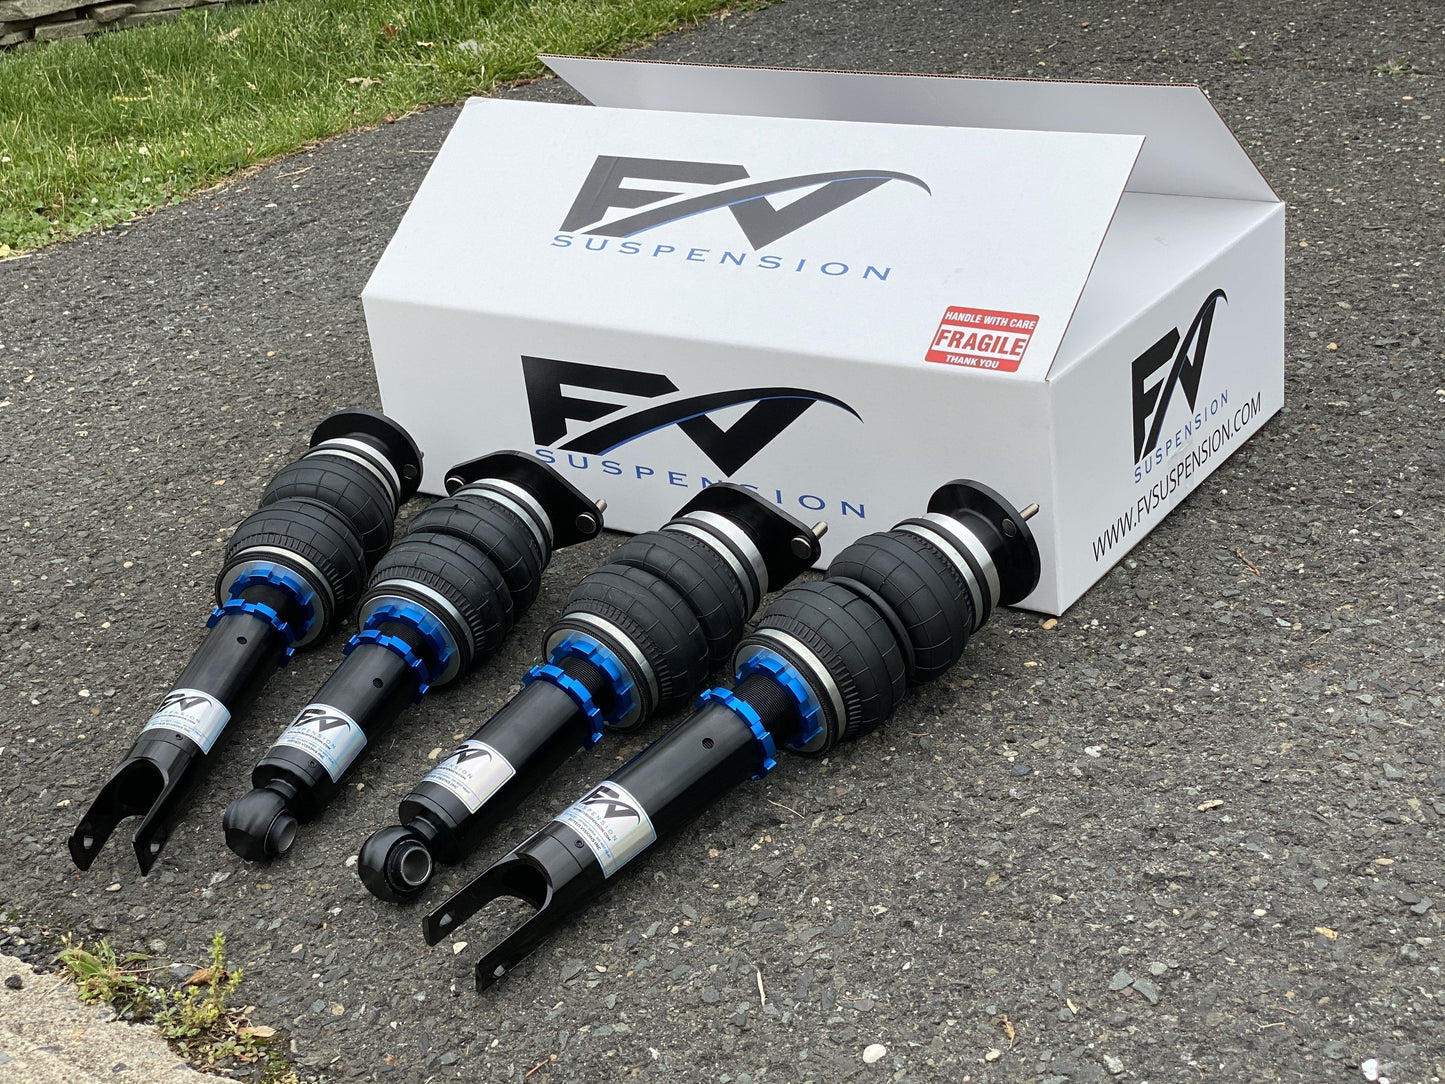 FV Suspension 3H Tier 3 Complete Air Ride kit for 03-10 BMW 6 Series - FVALtier3kit108